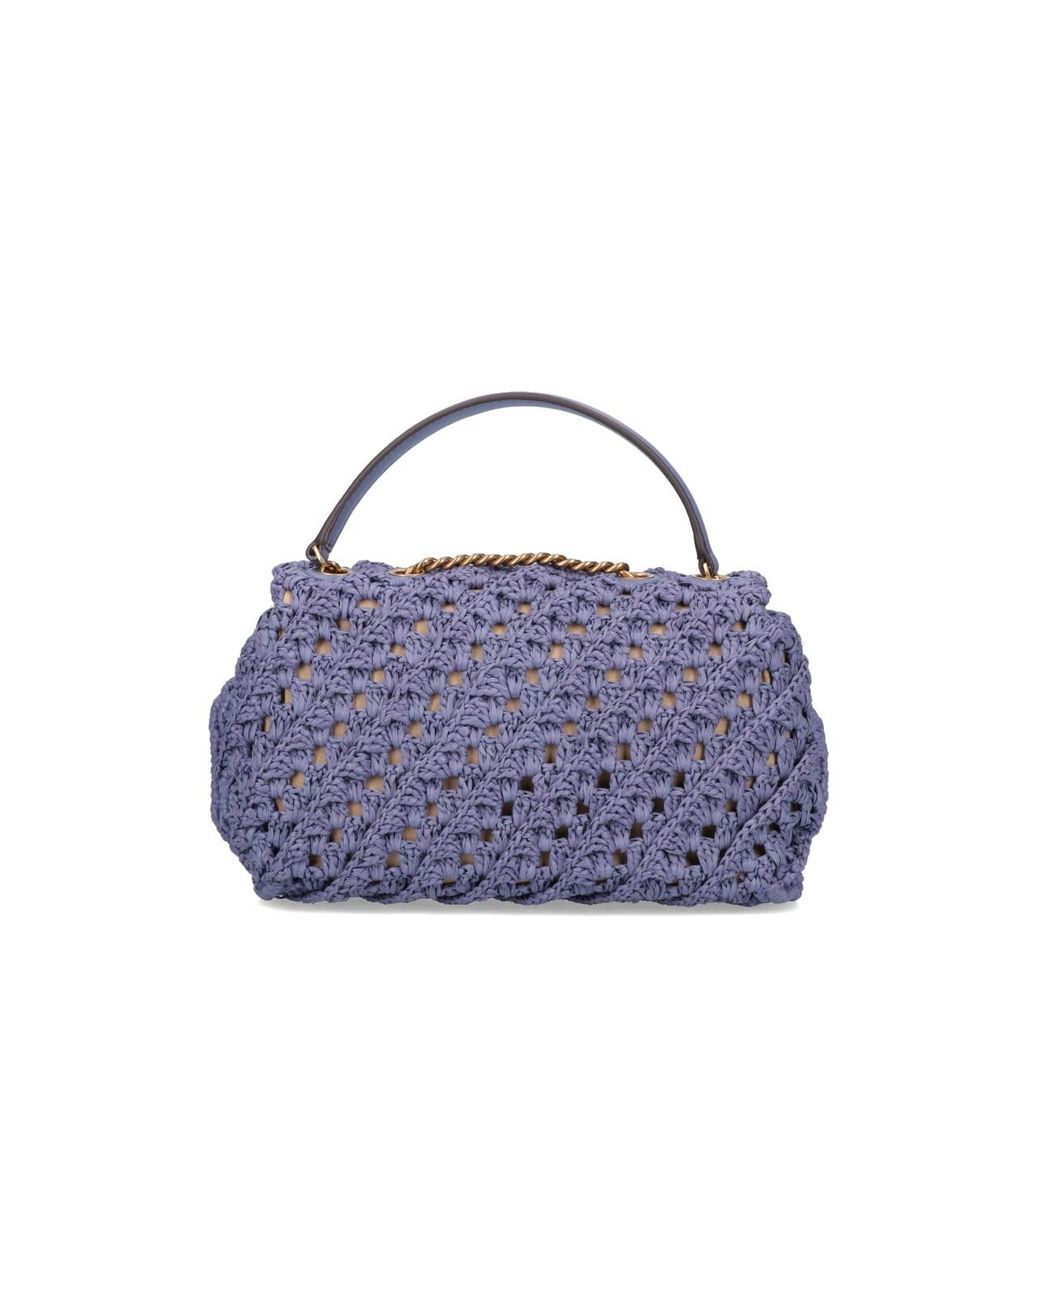 shopbop.com Tory Burch Kira Crochet Mini Bag 498.00